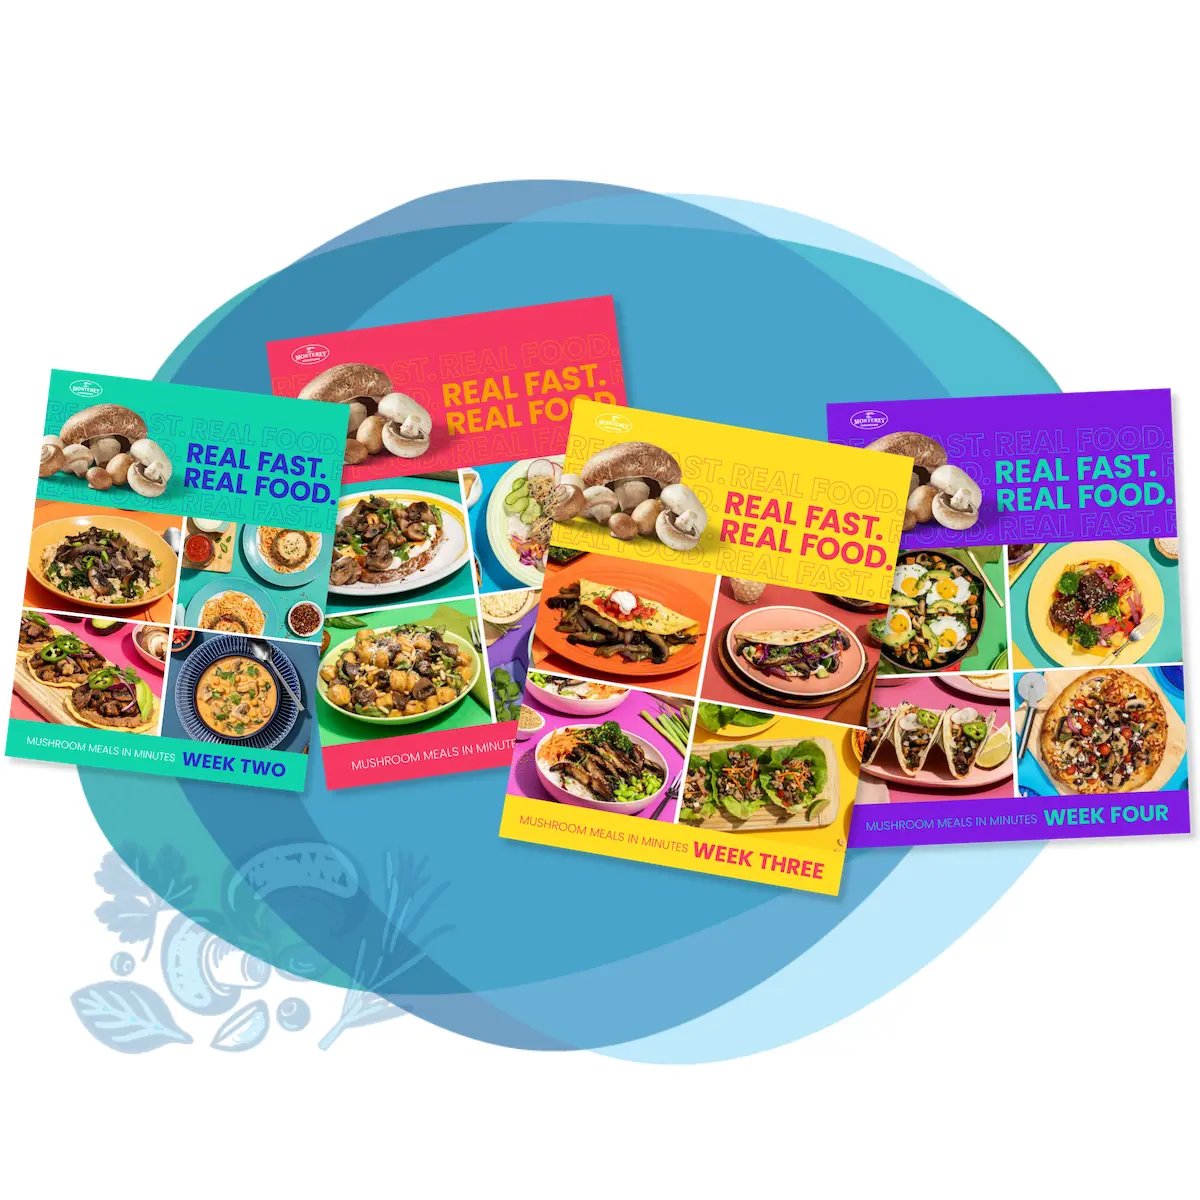 Real Fast Real Food Meal Planner Homepage